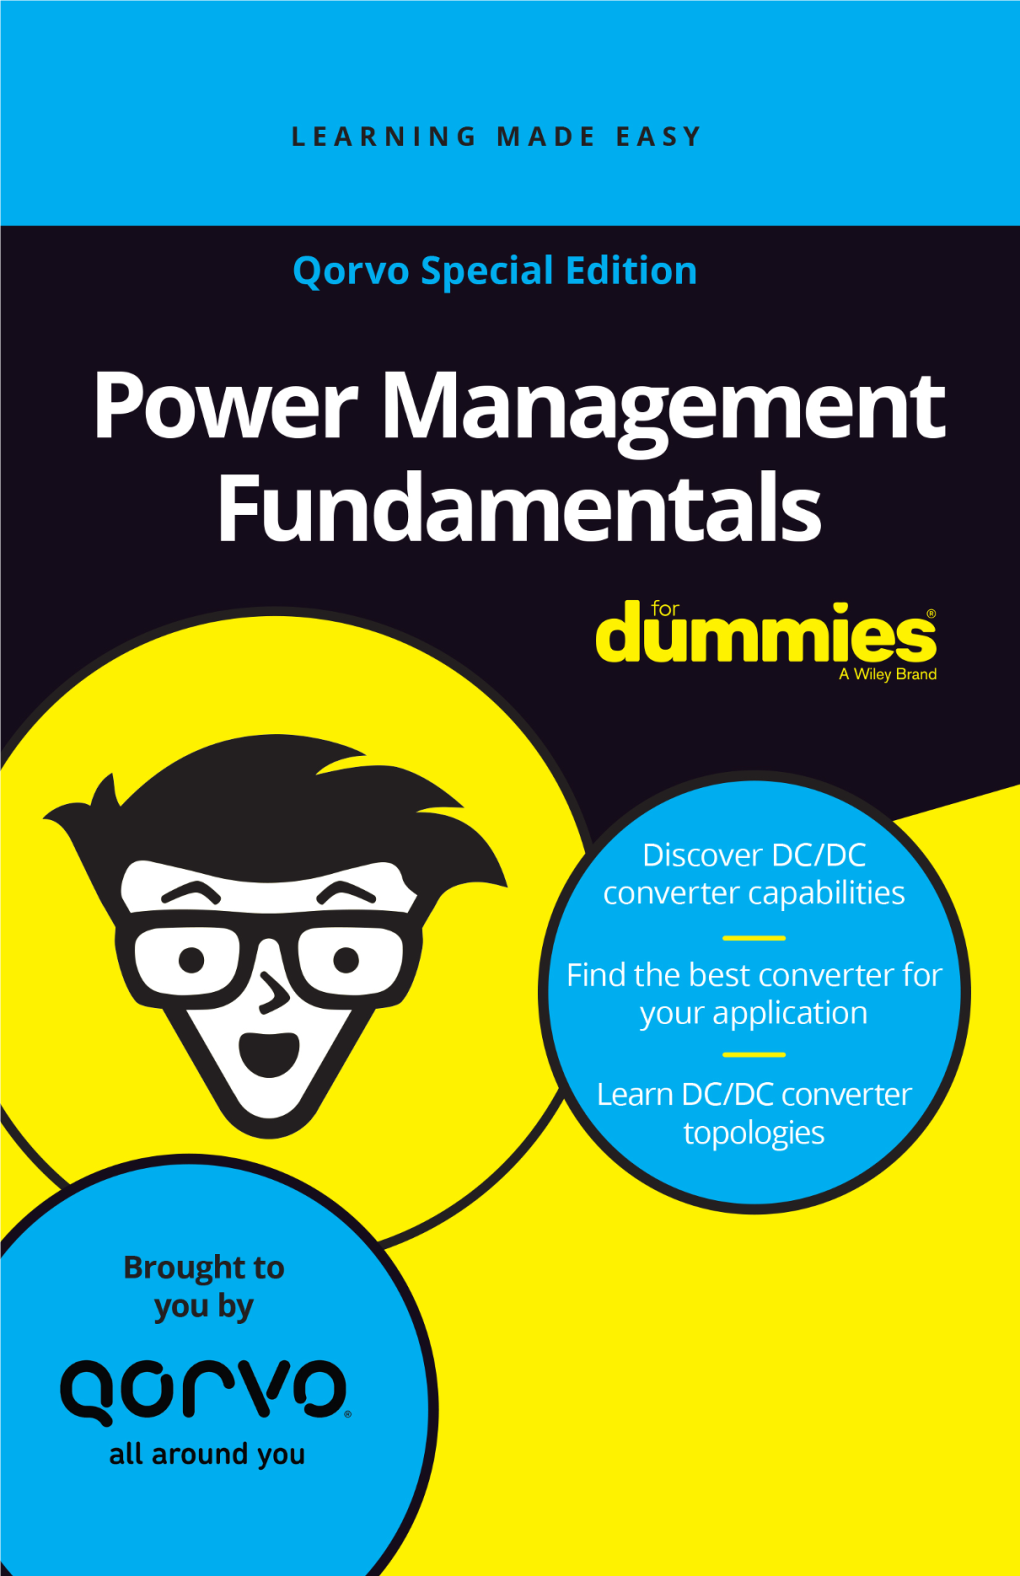 Qorvo: Power Management Fundamentals for Dummies